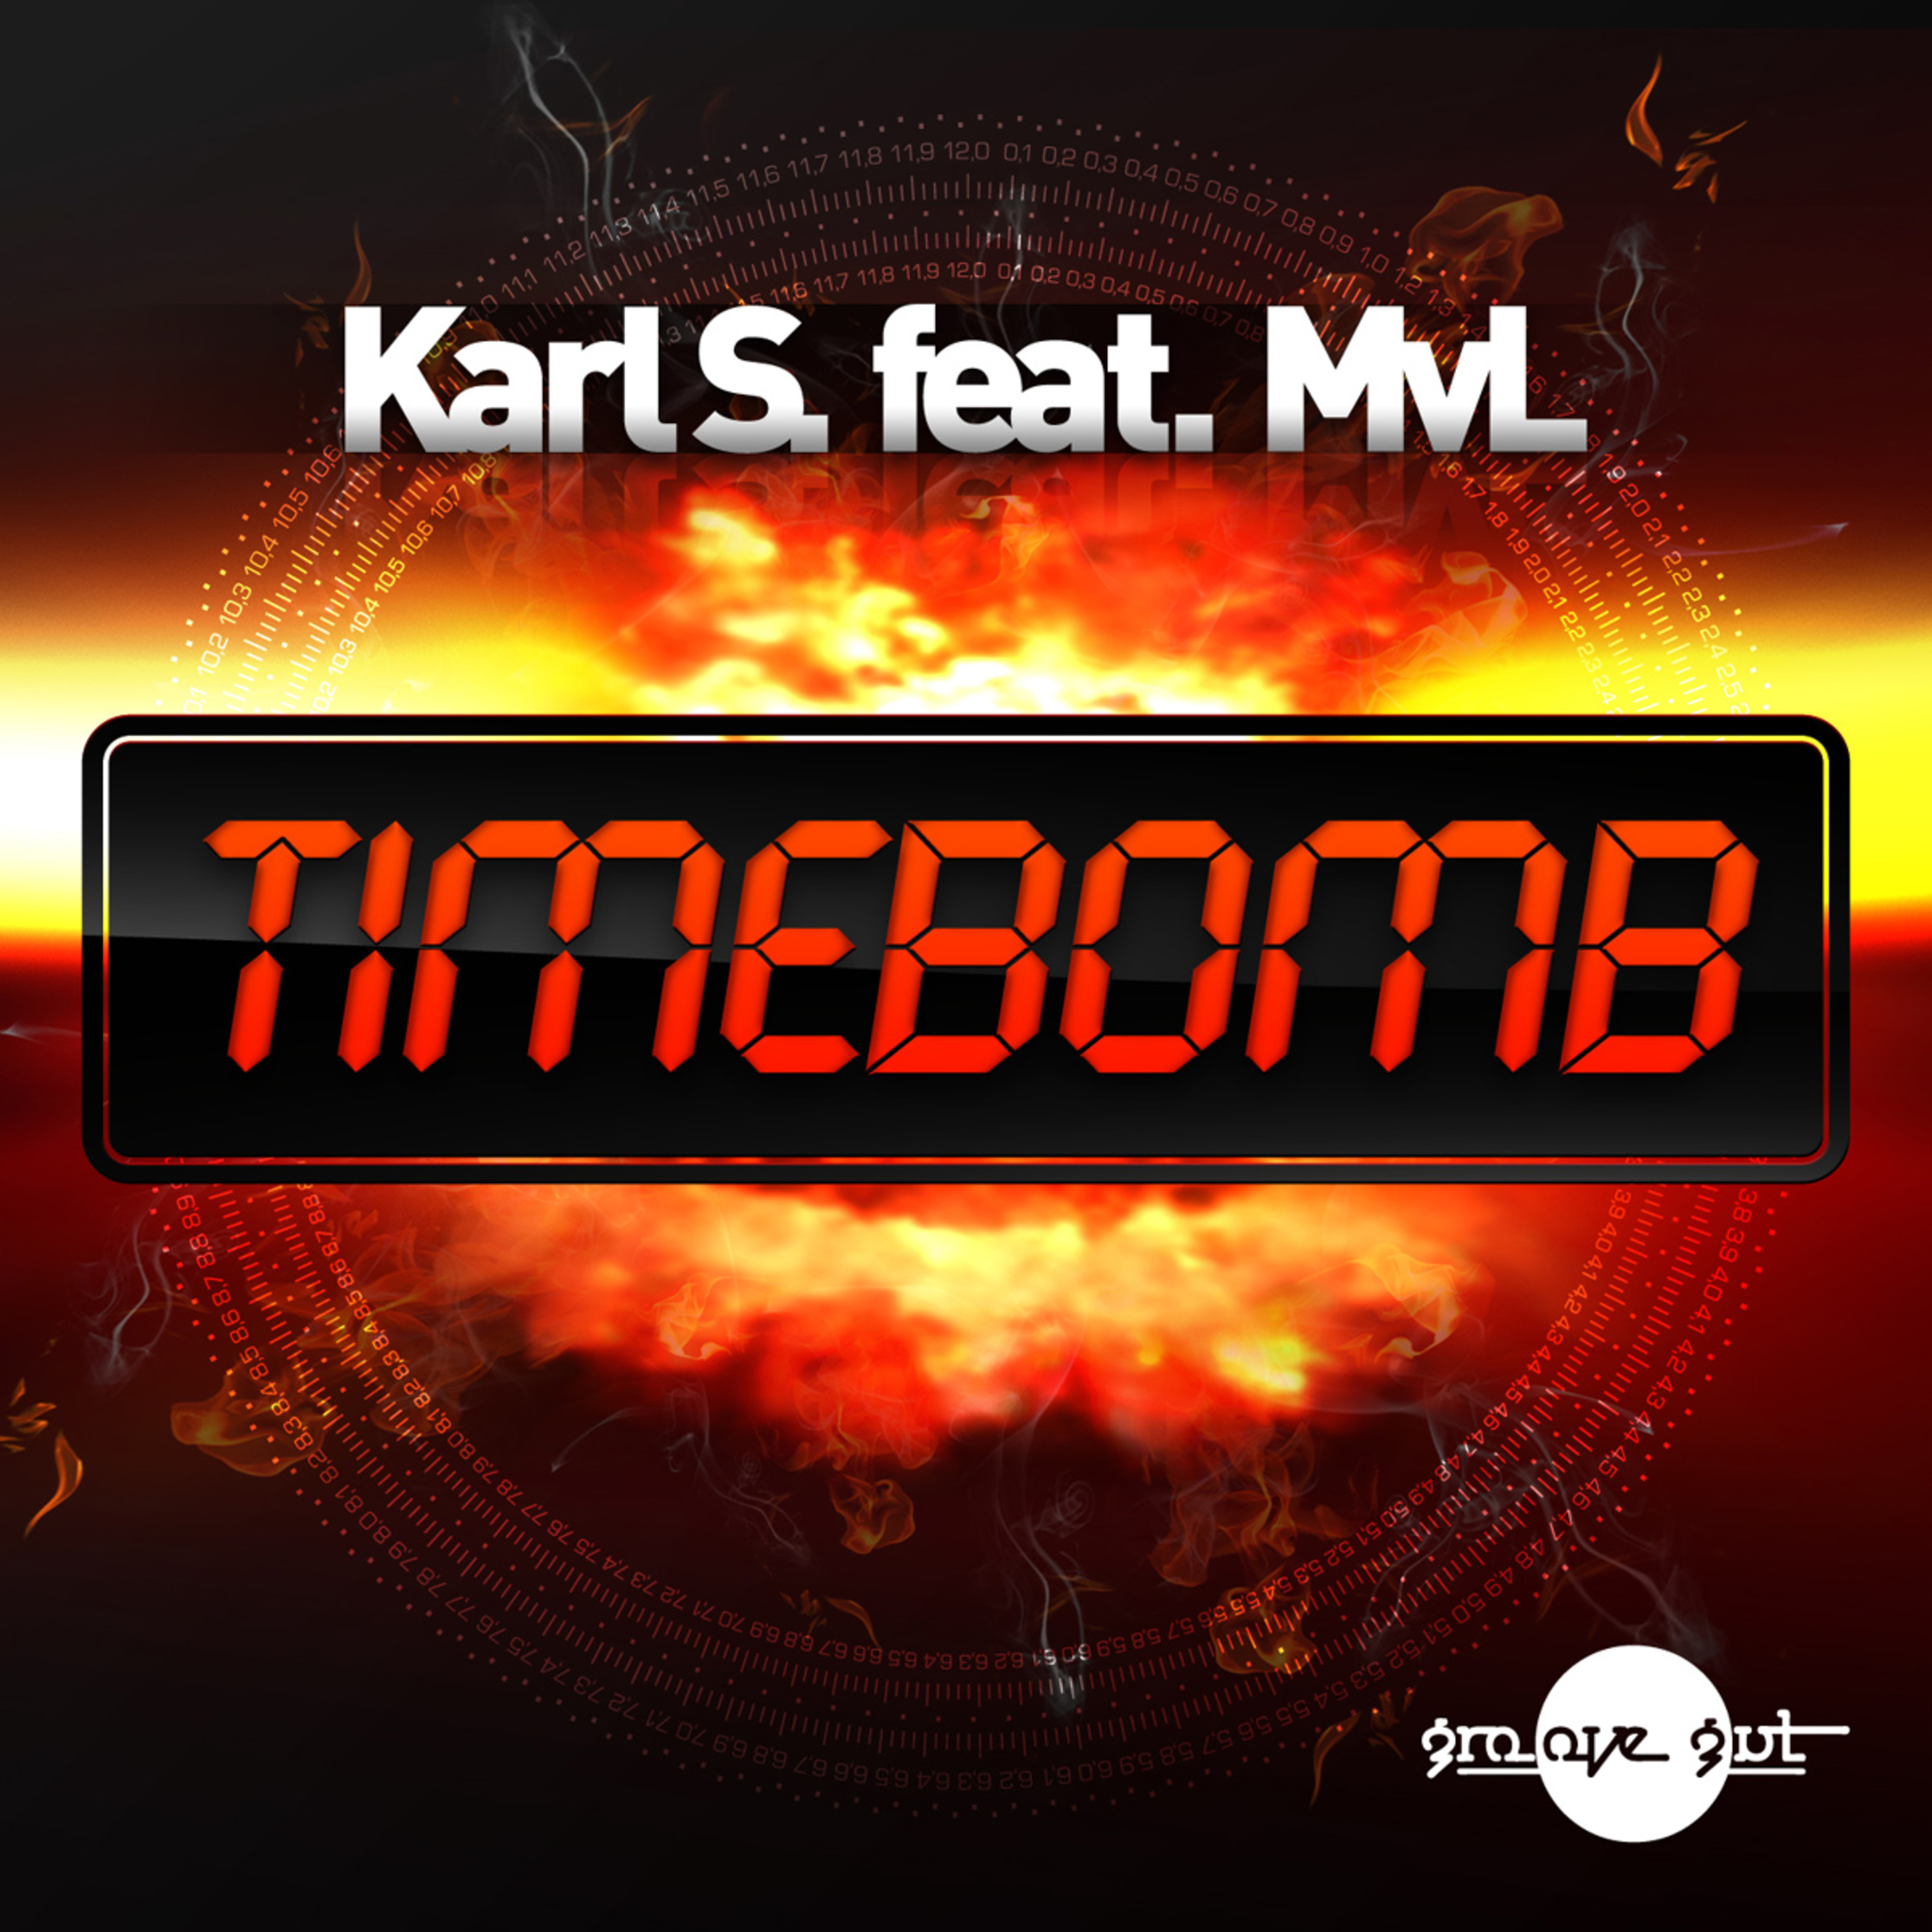 Timebomb (Digiwave Remix)